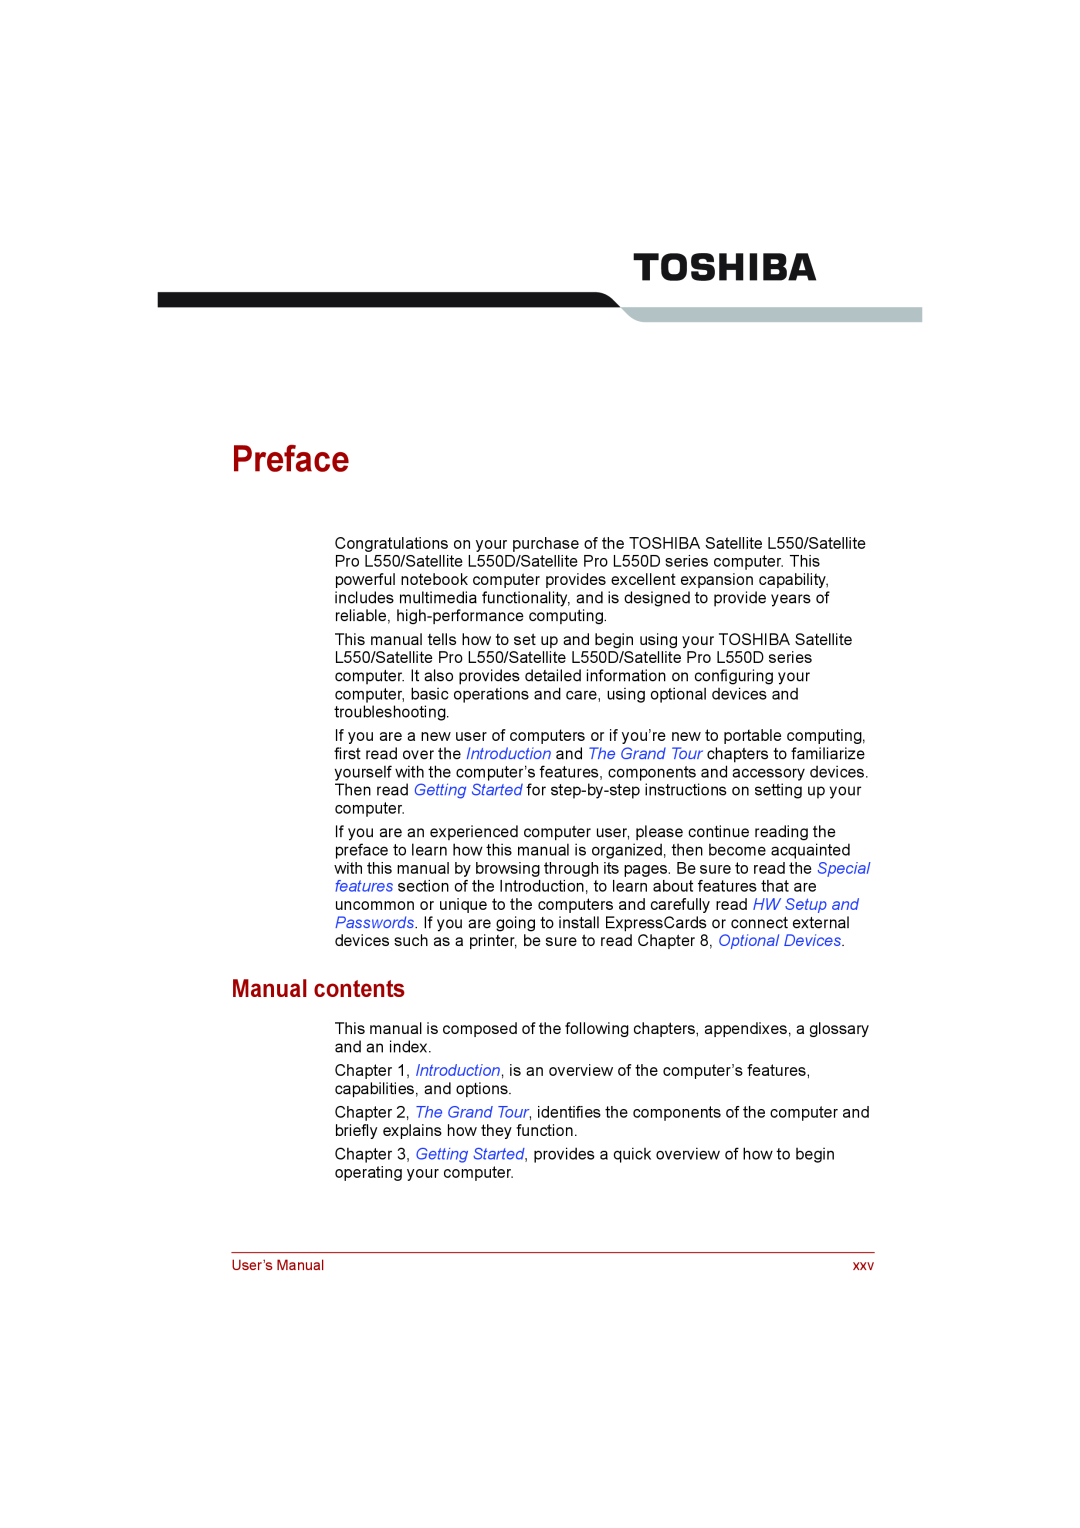 Toshiba toshiba satellite l550/ satellite pro l550/ satellite l550d/ satellite pro l550d series Preface, Manual contents 